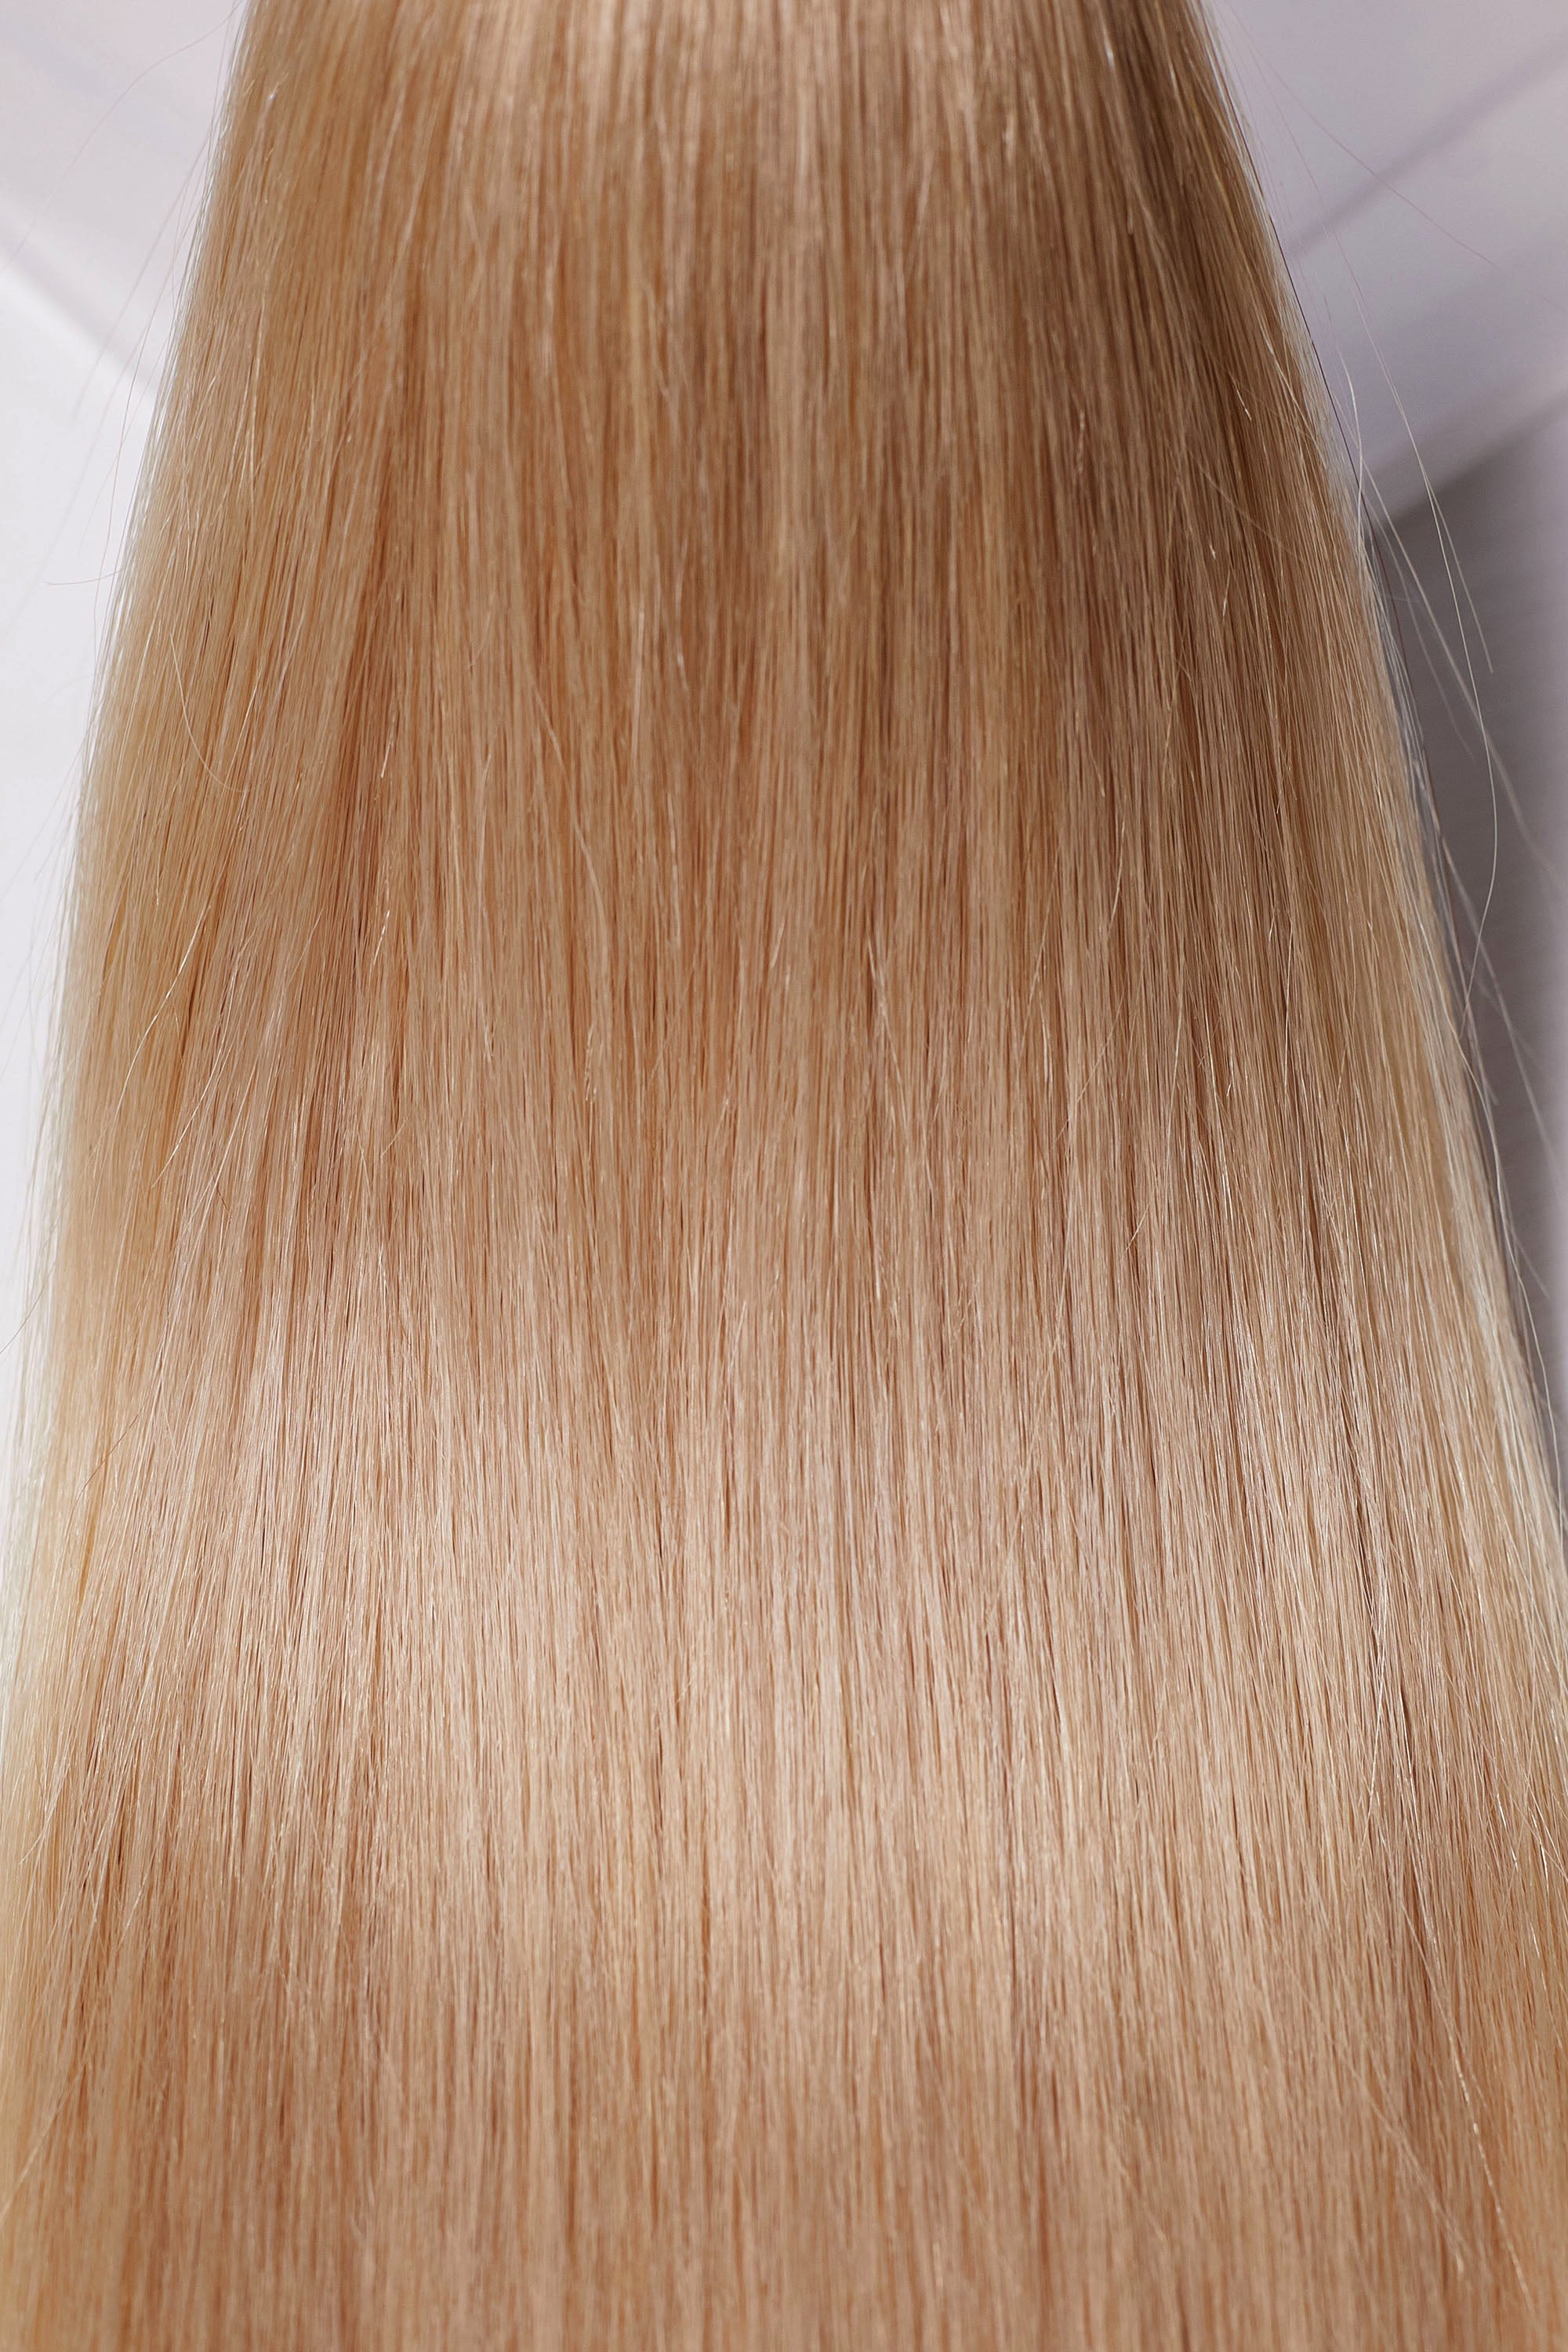 Behair professional Bulk hair "Premium" 24" (60cm) Natural Straight Light Gold Sand #16 - 25g hair extensions